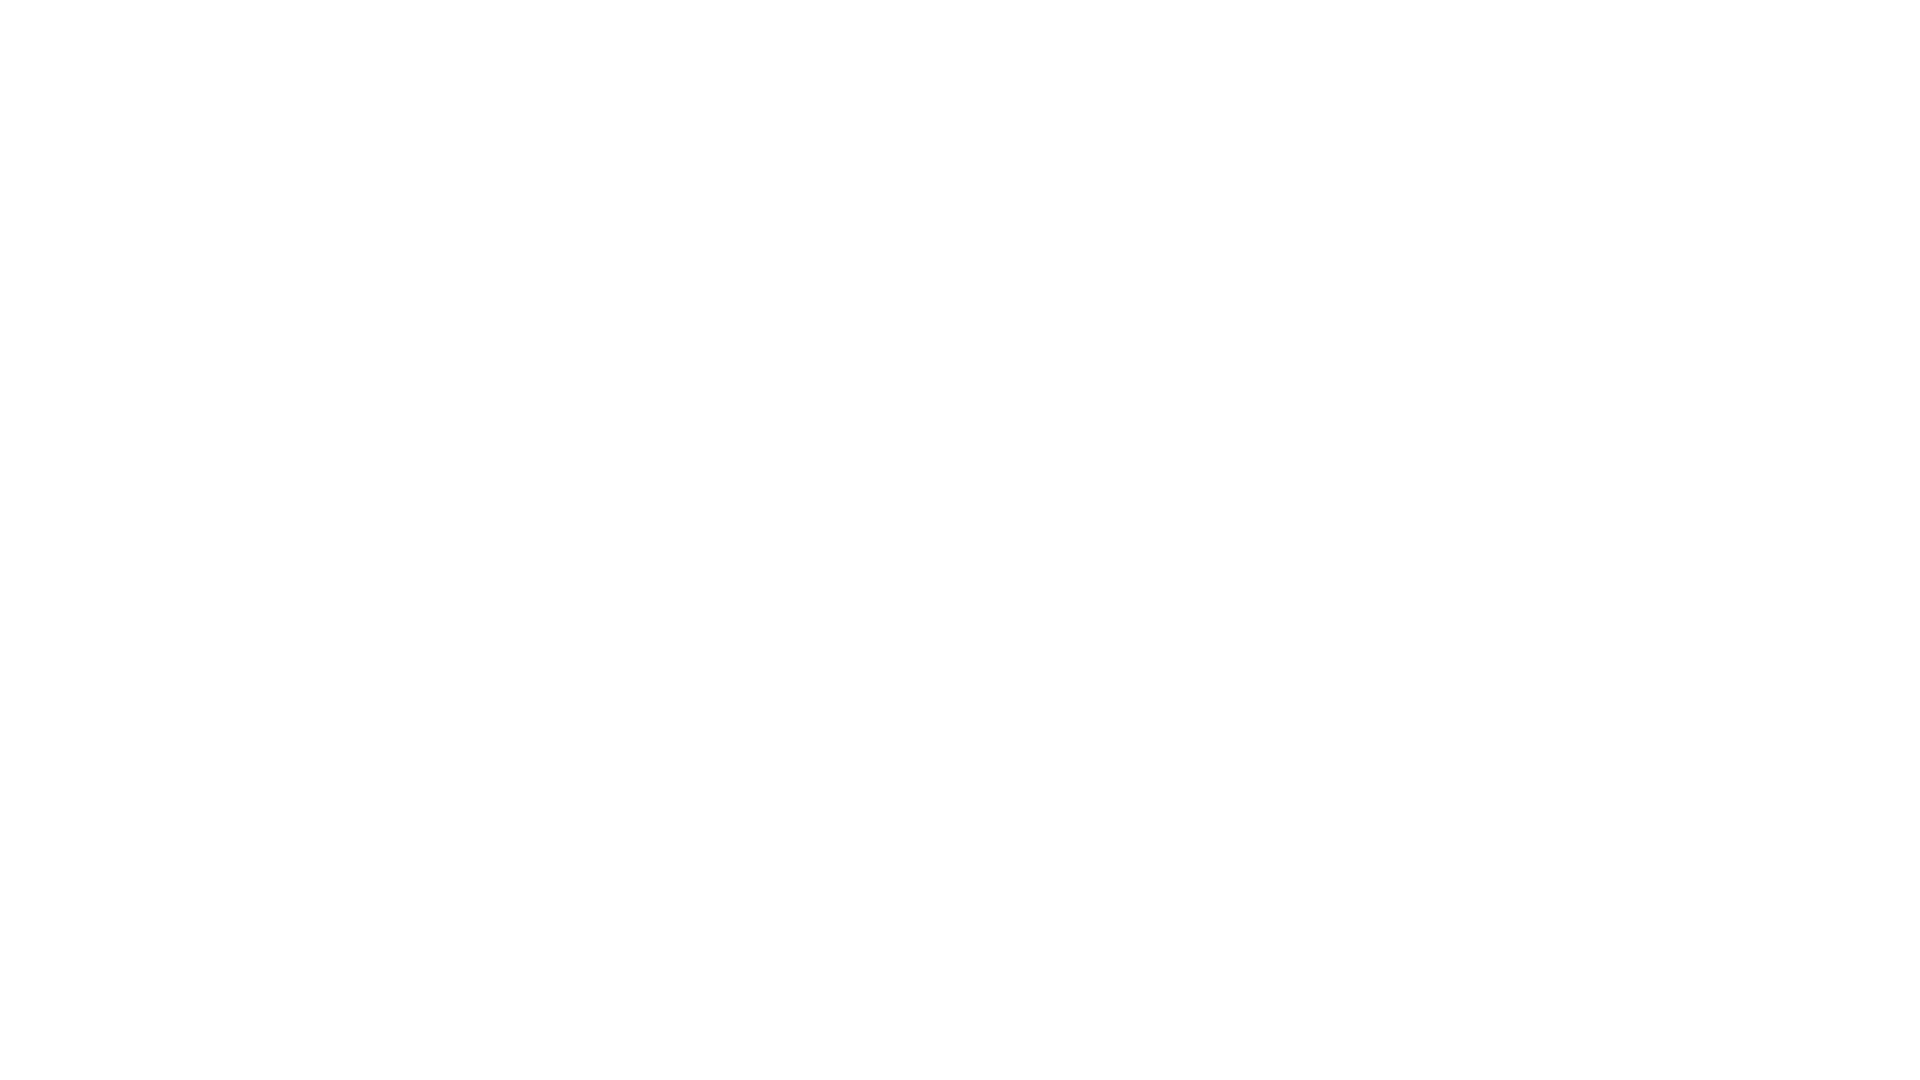 Taylor Quality Guitars